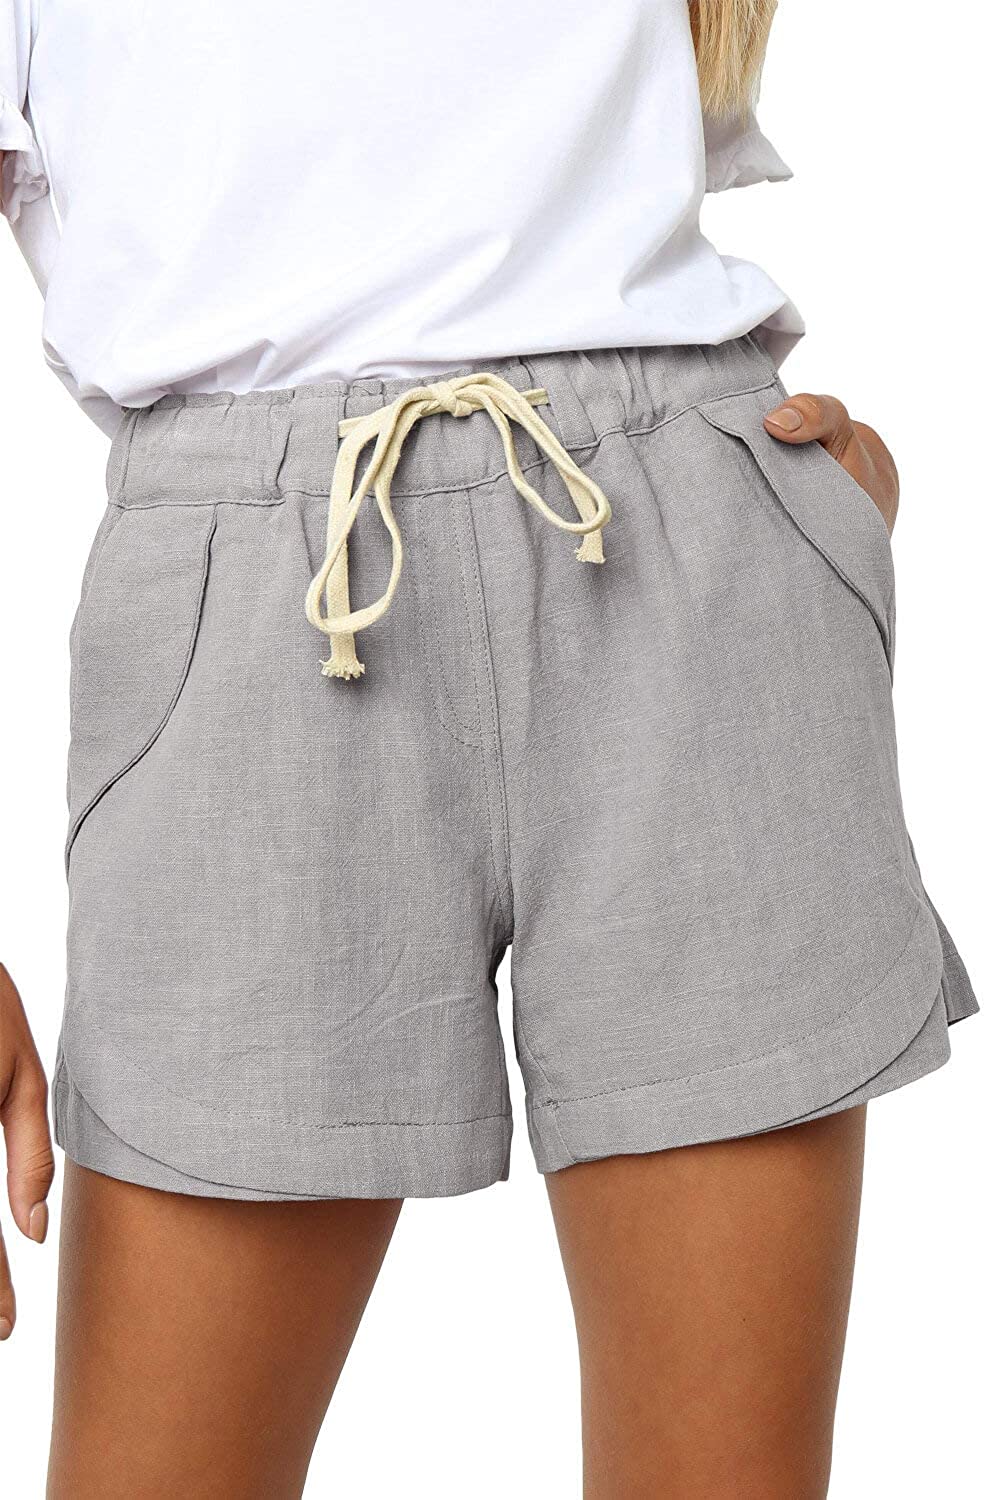 SWEET POISON Womens Shorts Summer Casual Drawstring Elastic Waist Cotton/Denim Comfy Short with Pockets 